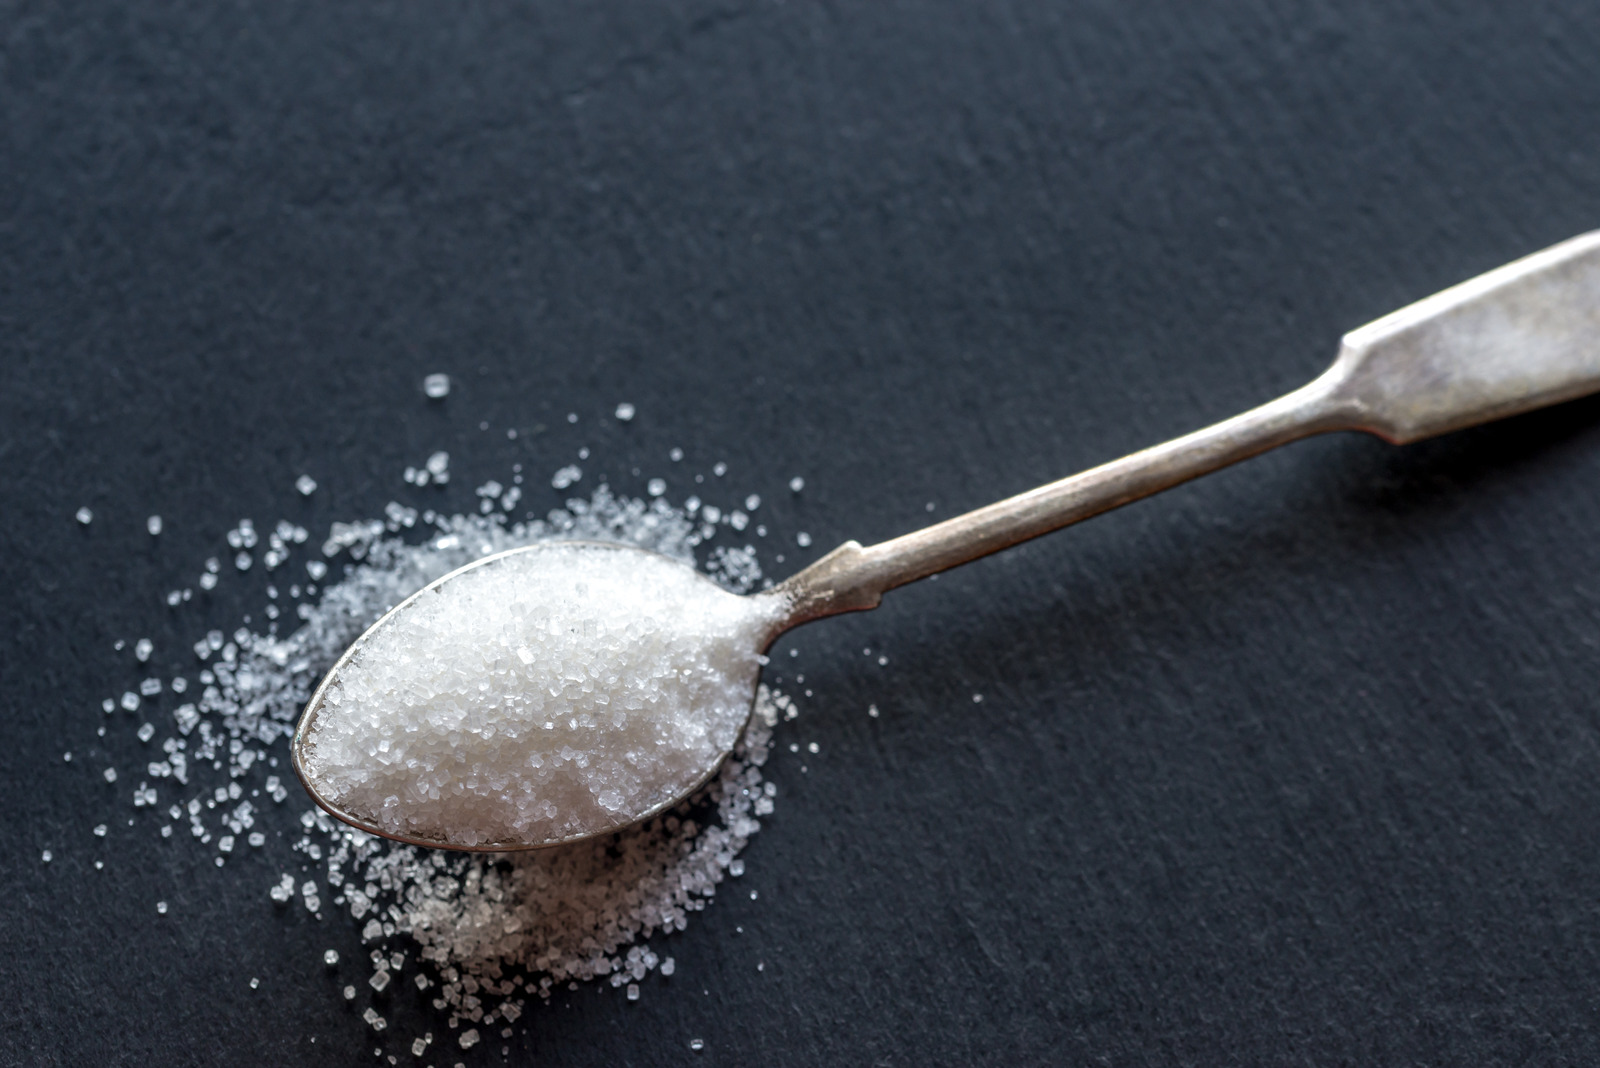 A Teaspoon of White Sugar on a Dark Background